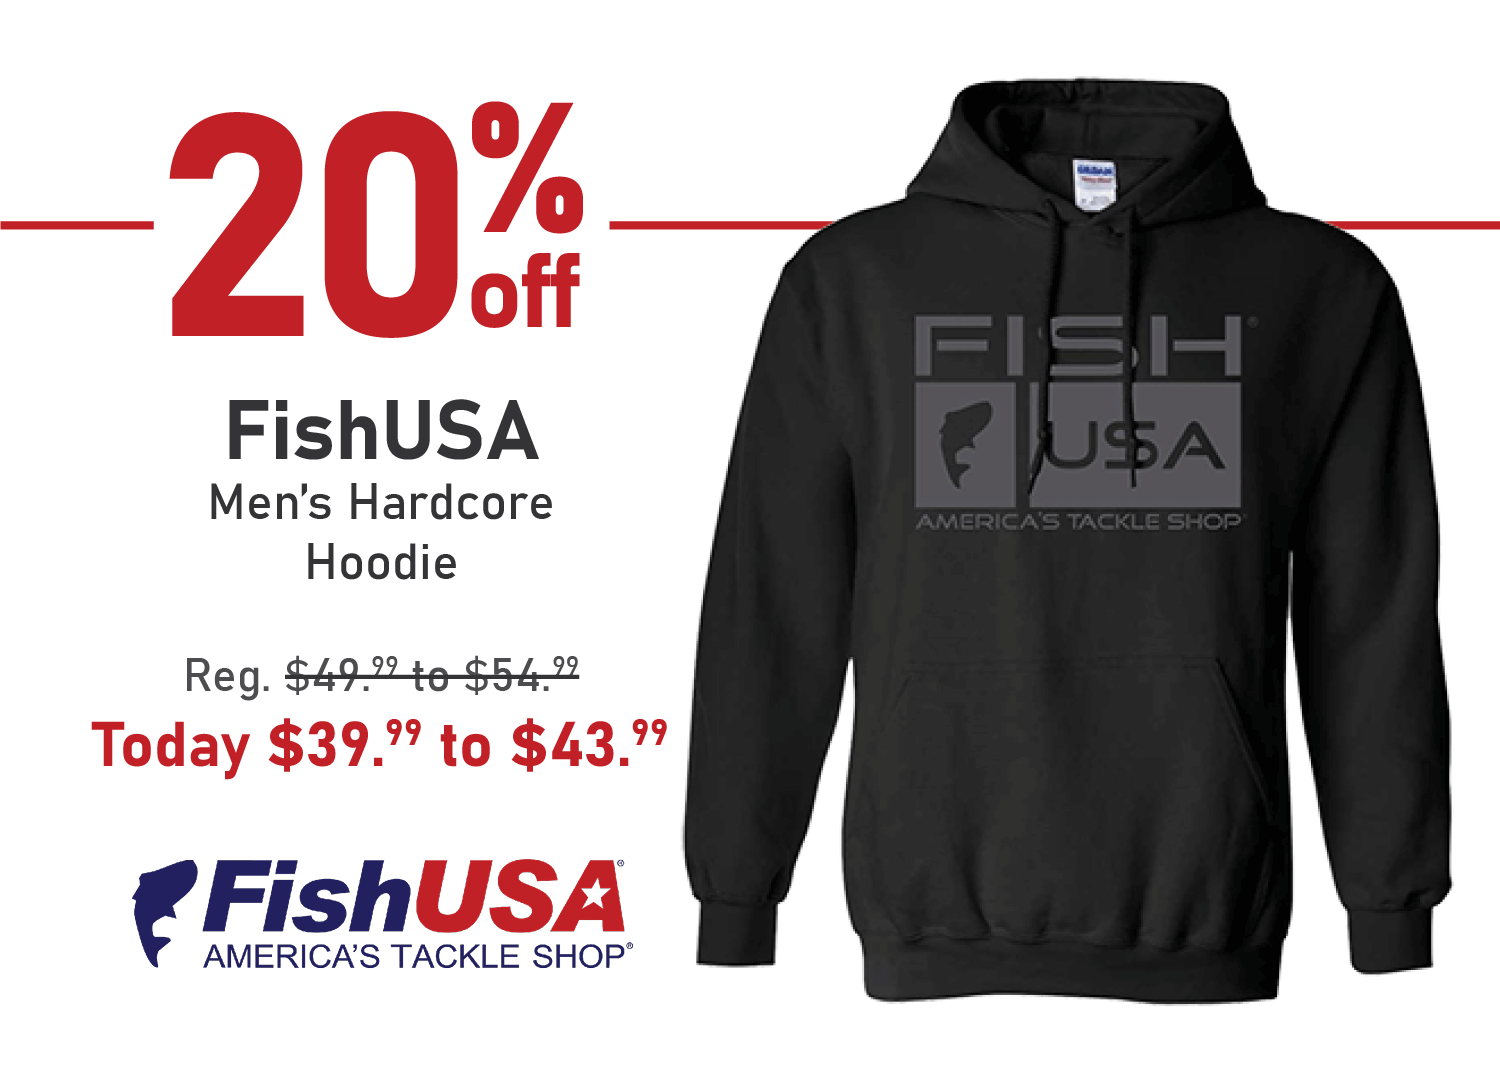 Save 20% on the FishUSA Men's Hardcore Hoodie